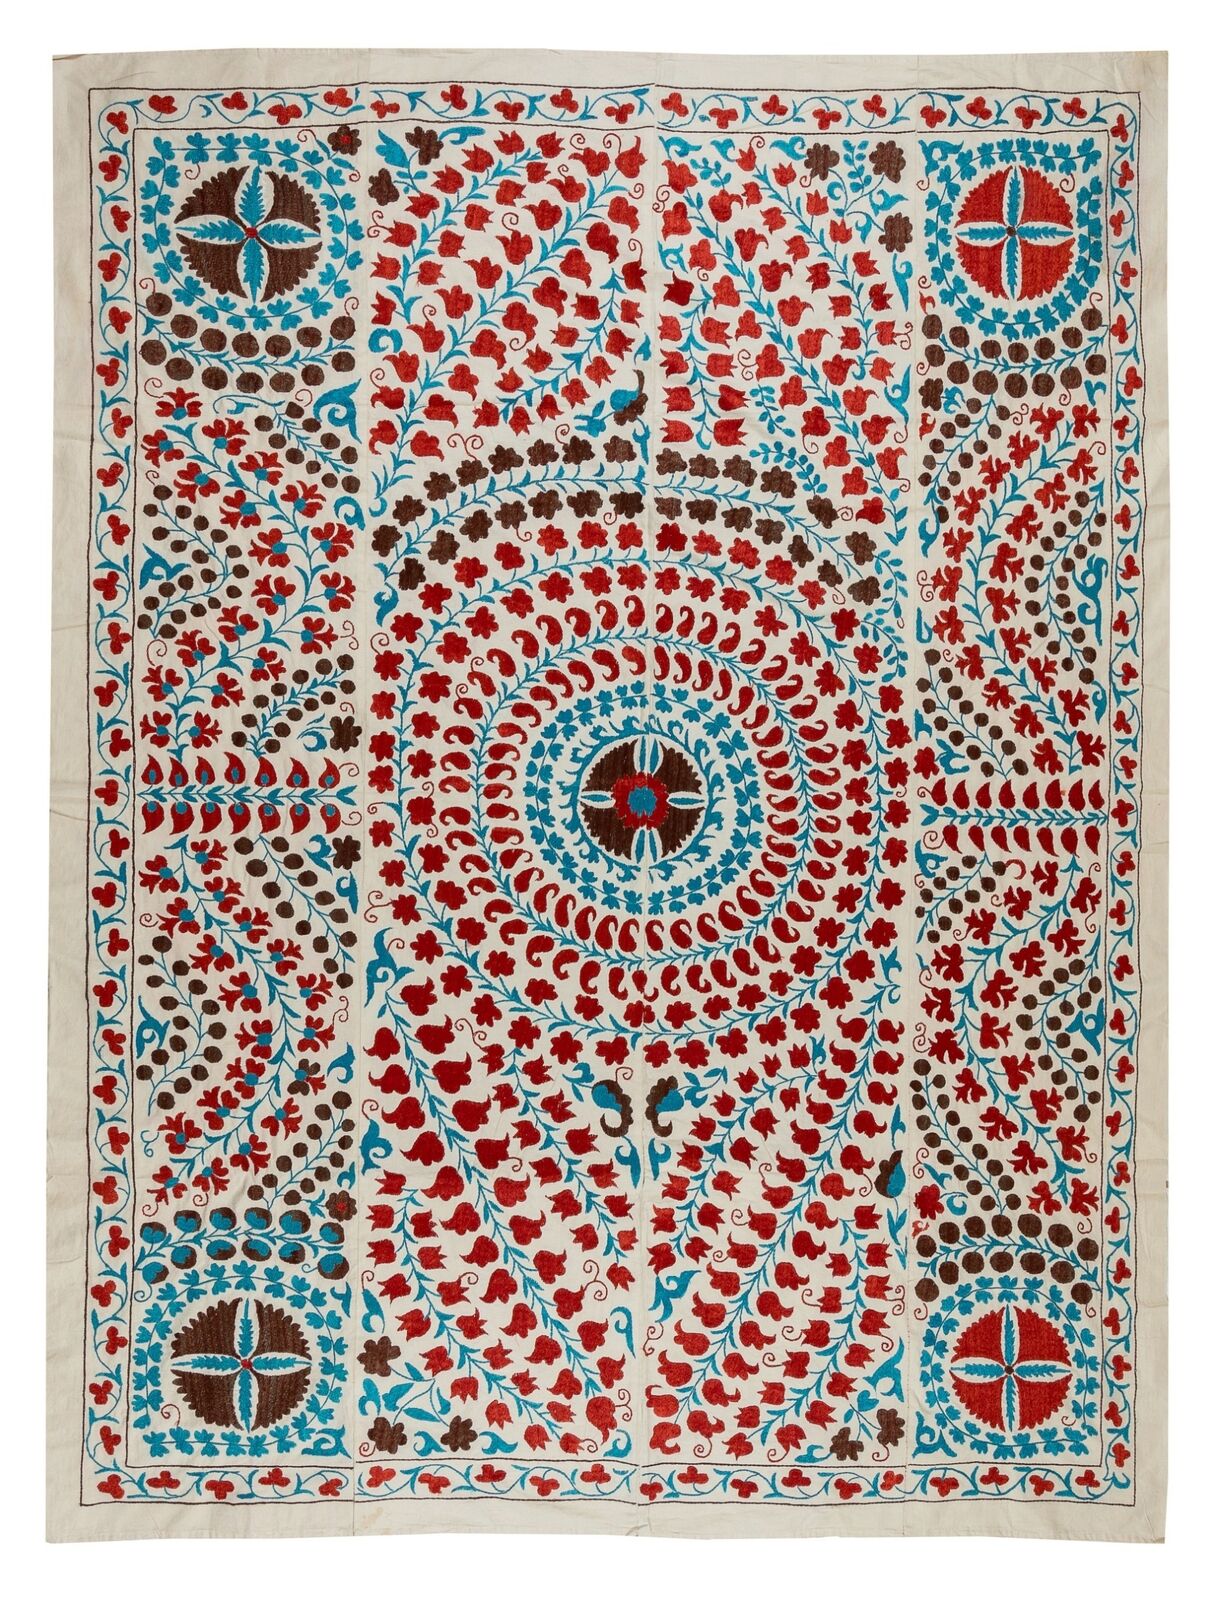 6.3x8.3 Ft Brand New Uzbek Suzani Textile. Embroidered Silk, Cotton Wall Hanging